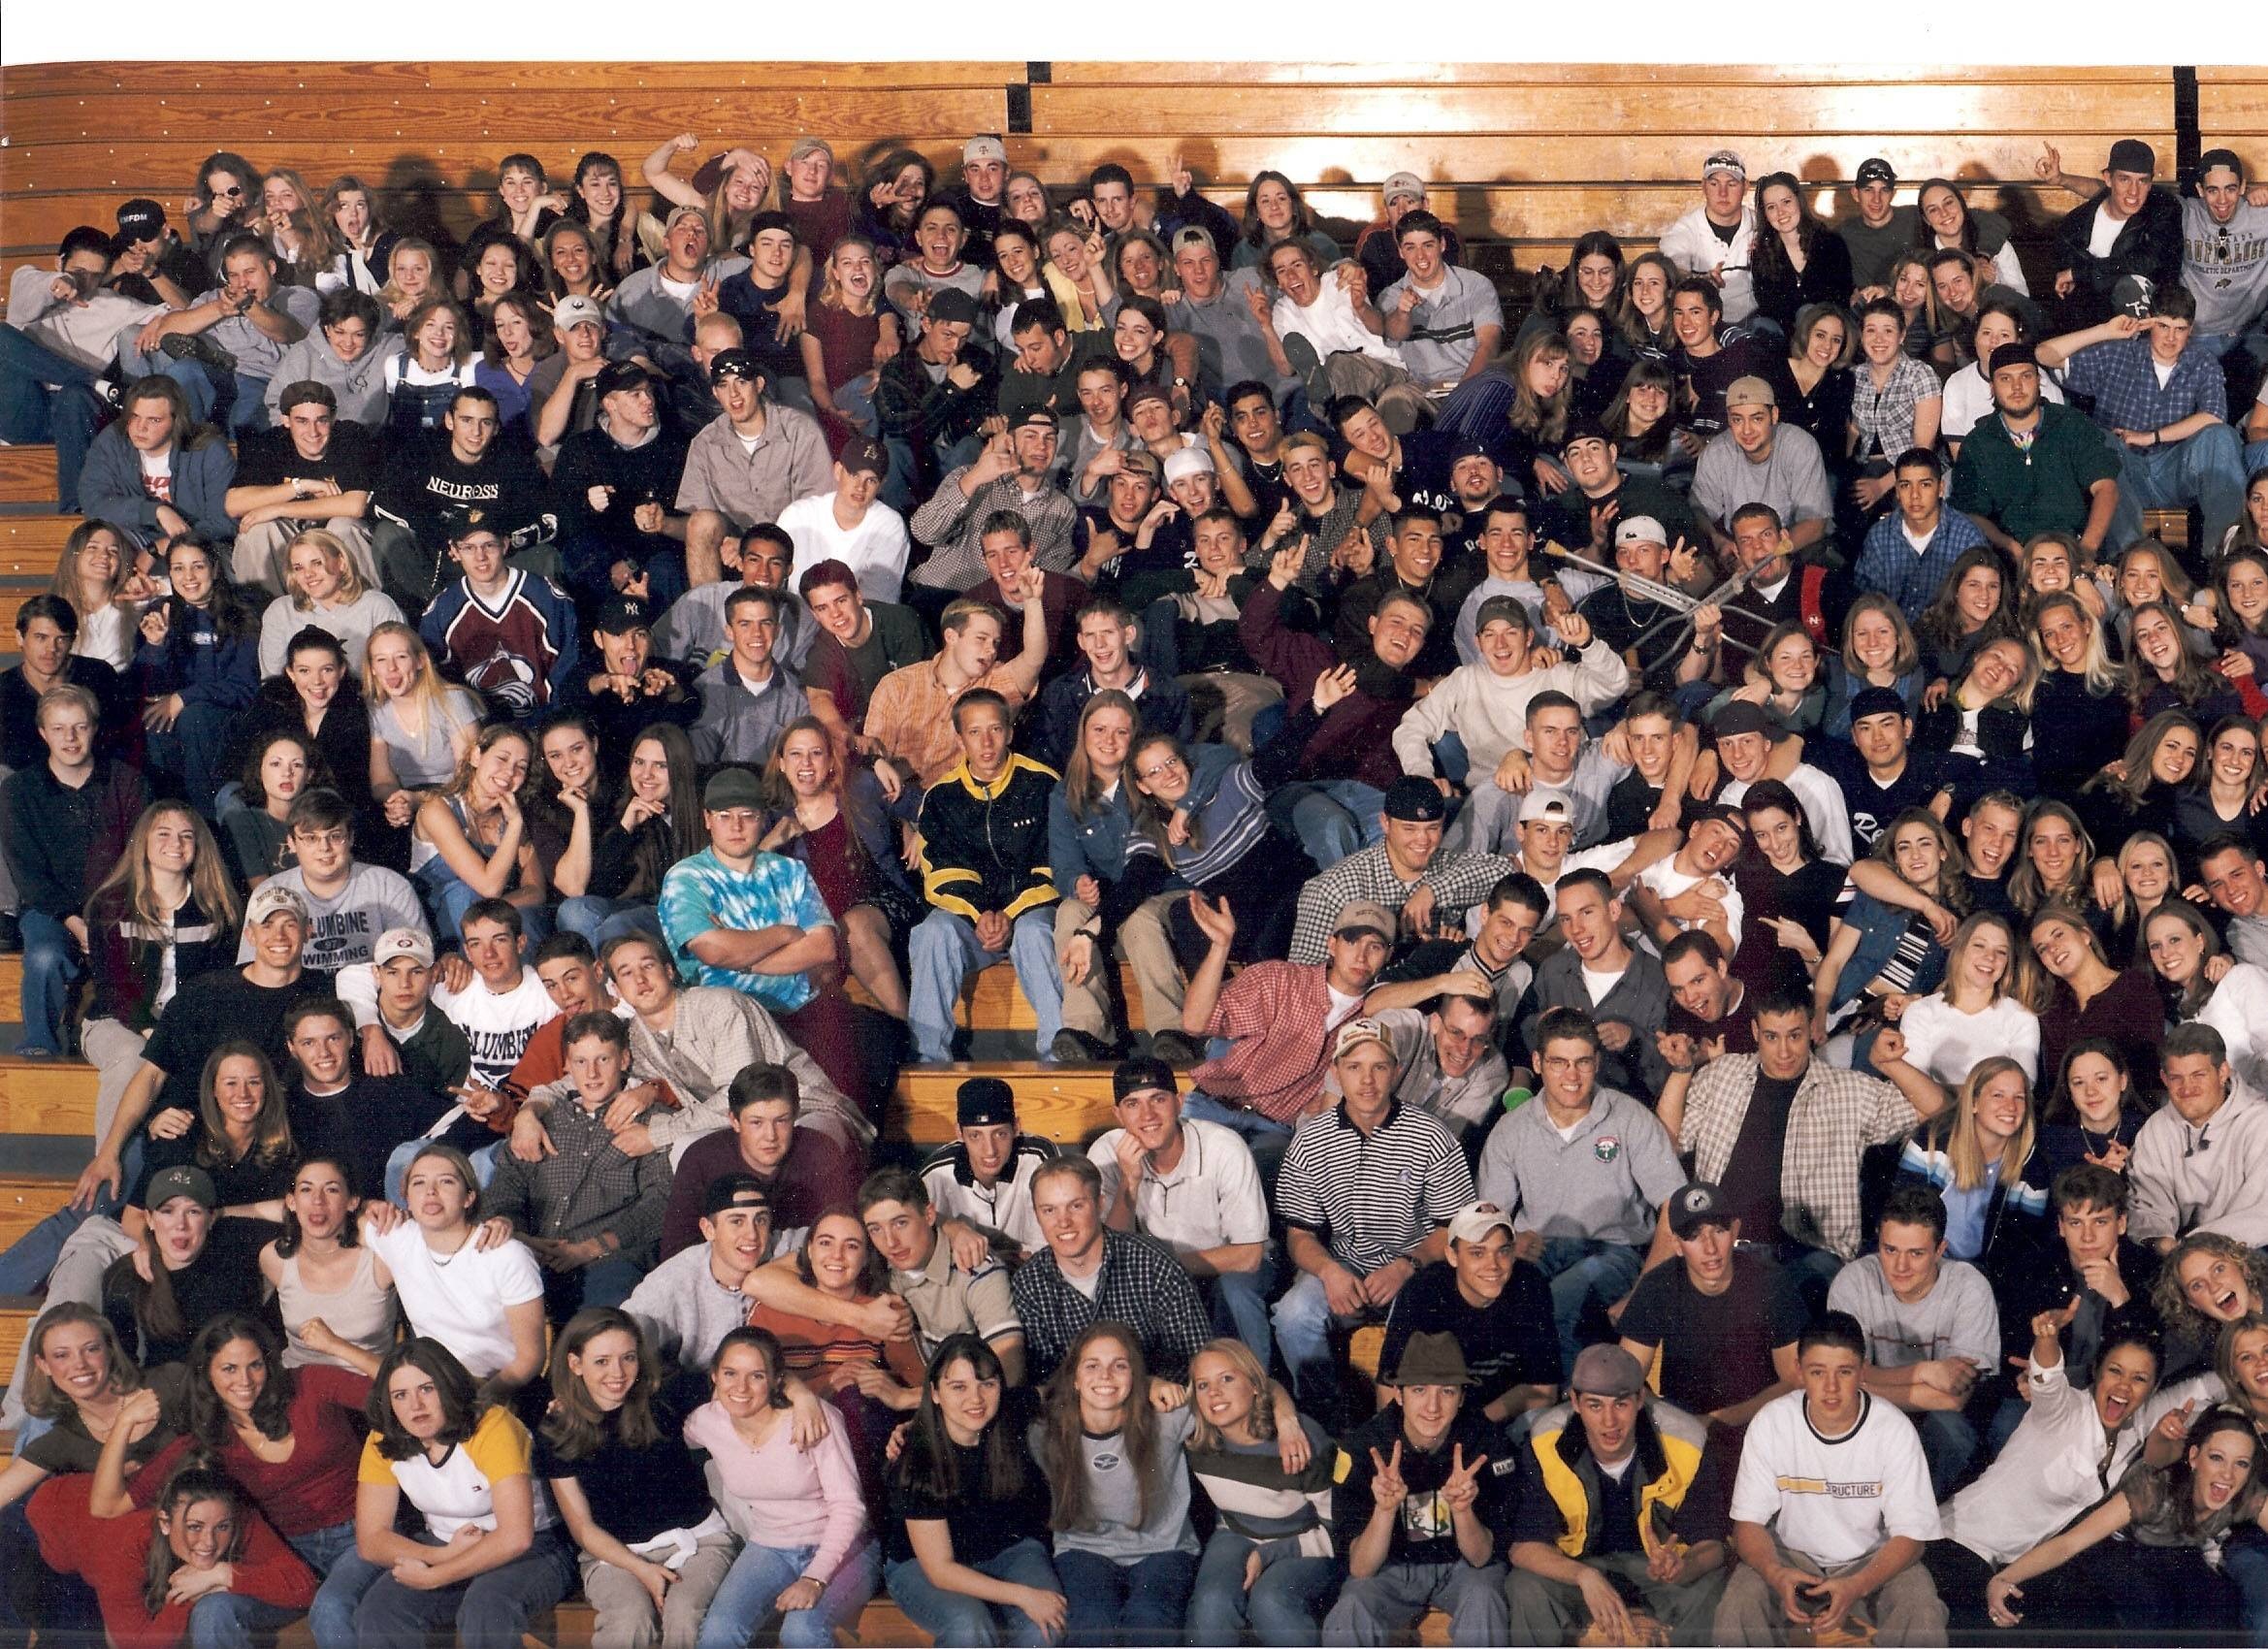 Columbine High School class of 1999. Check the top left.